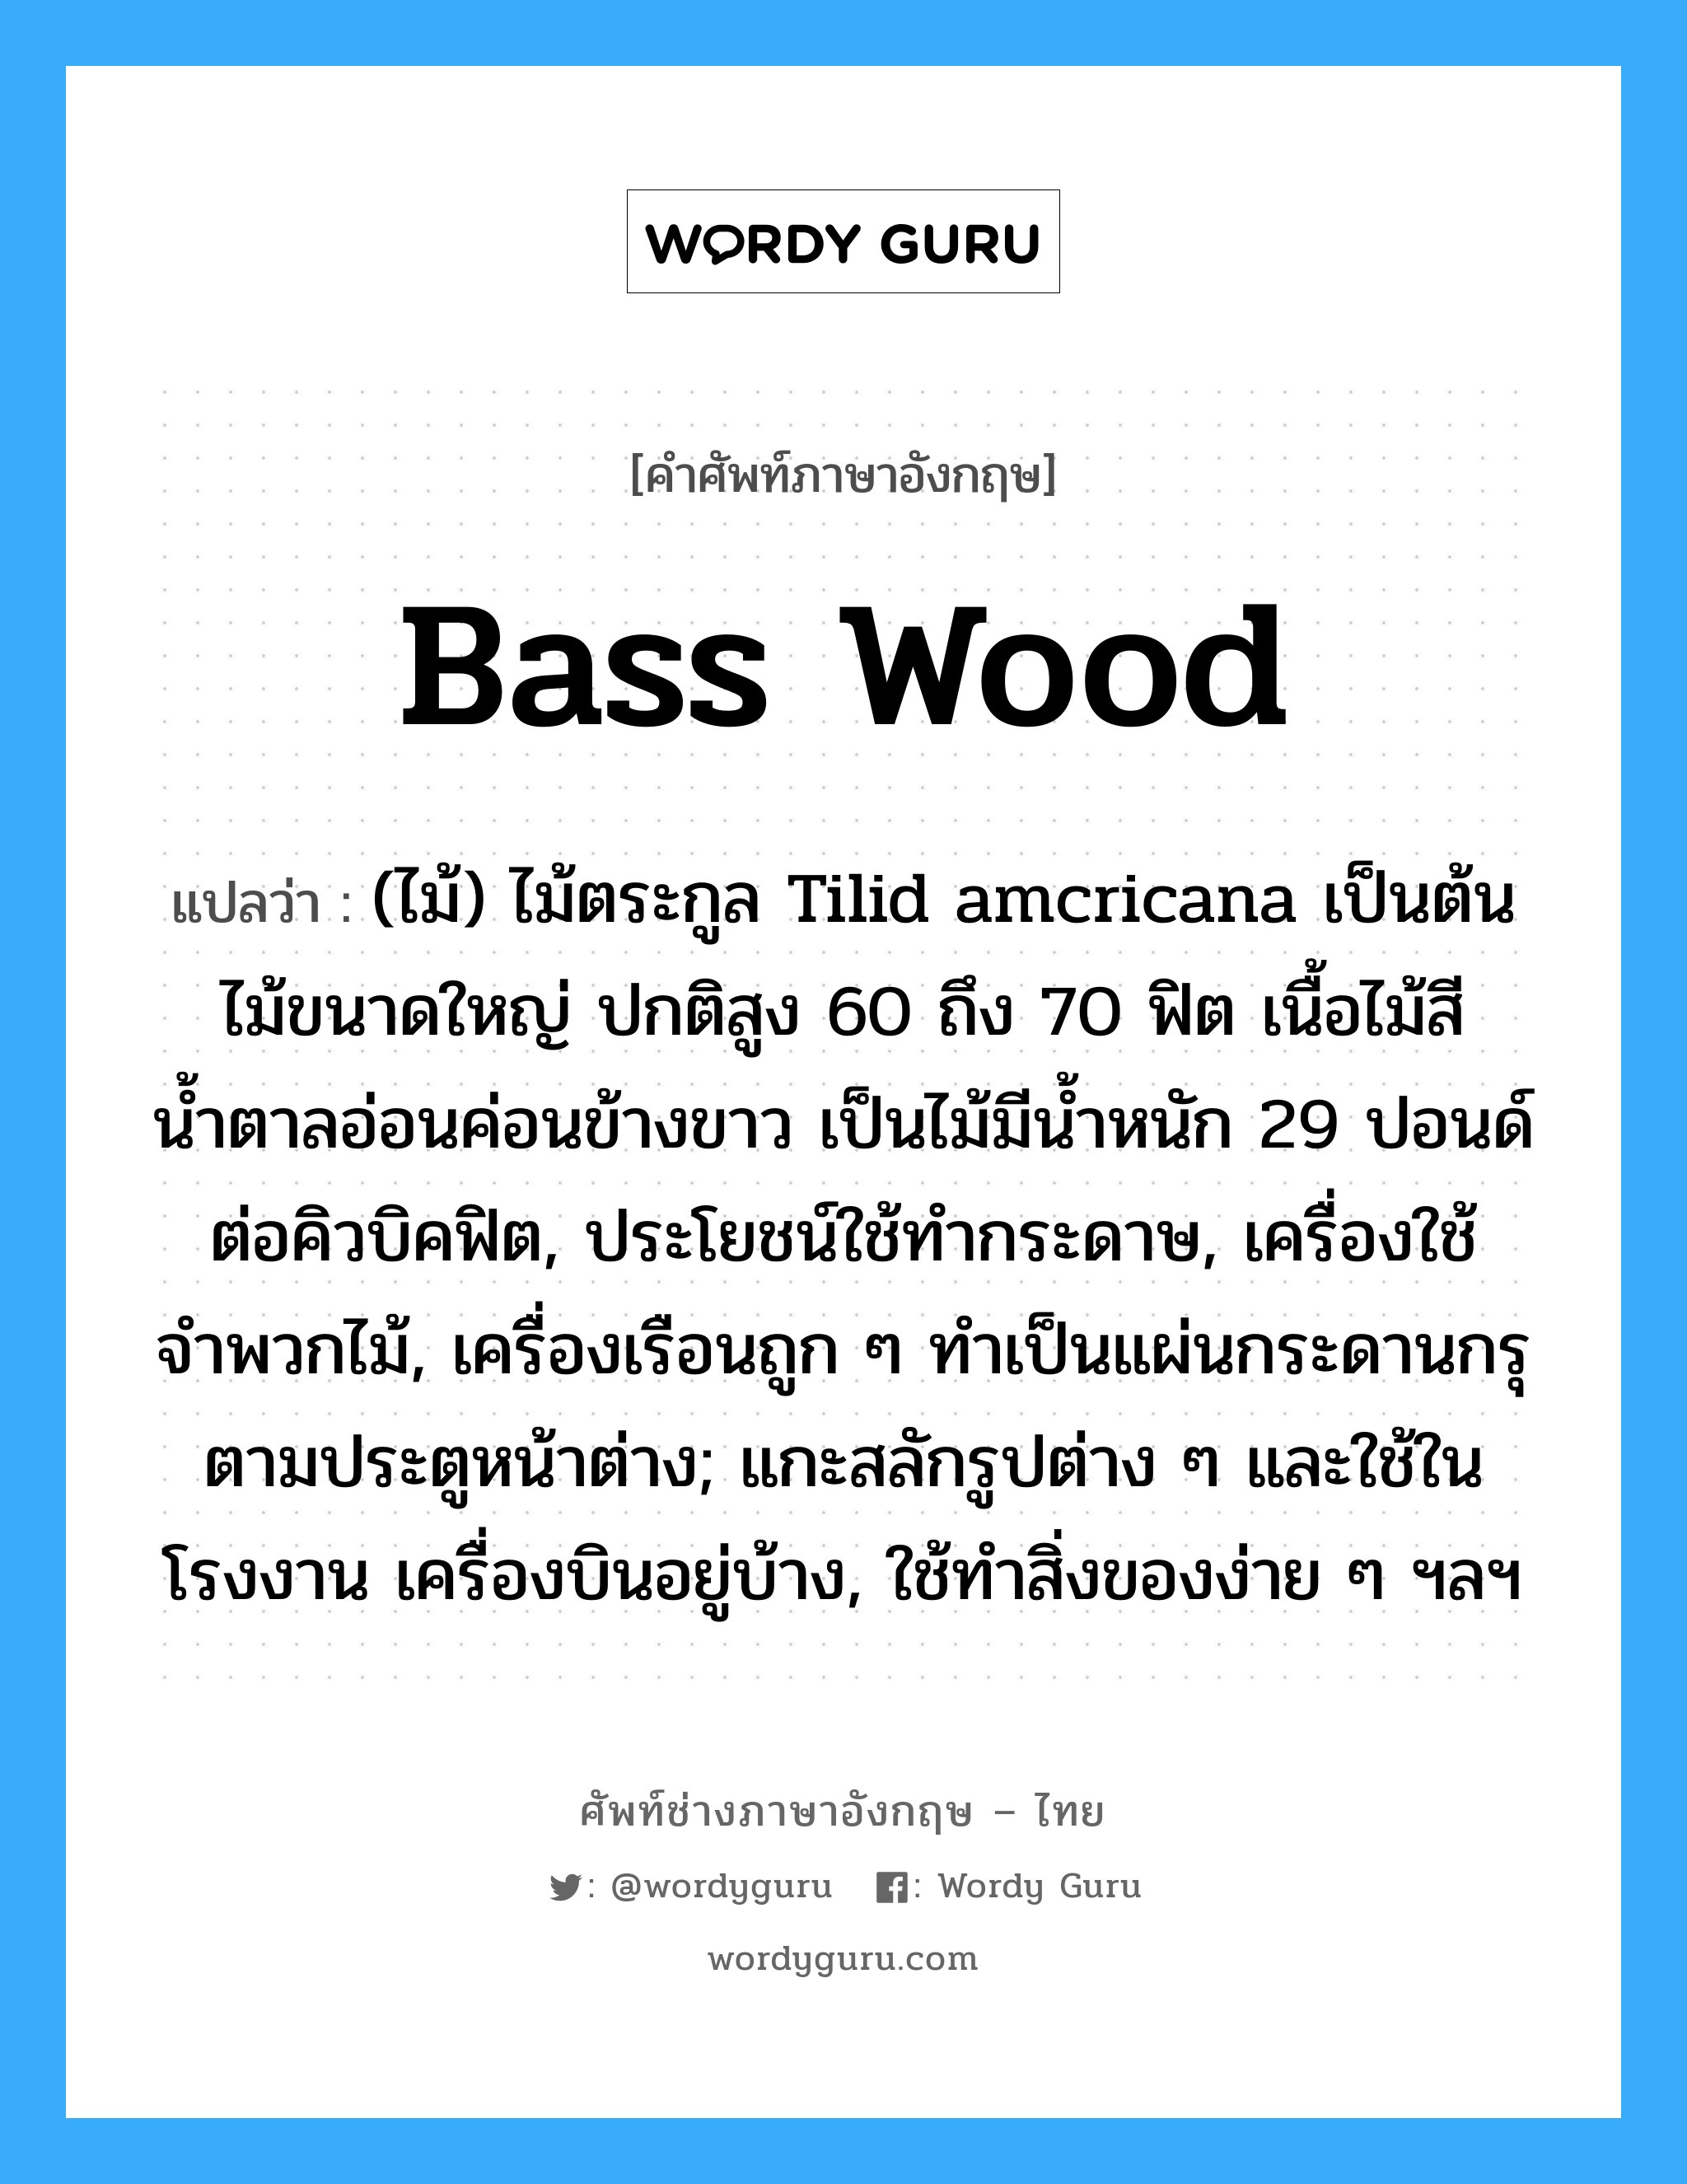 bass wood แปลว่า?, คำศัพท์ช่างภาษาอังกฤษ - ไทย bass wood คำศัพท์ภาษาอังกฤษ bass wood แปลว่า (ไม้) ไม้ตระกูล Tilid amcricana เป็นต้นไม้ขนาดใหญ่ ปกติสูง 60 ถึง 70 ฟิต เนื้อไม้สีน้ำตาลอ่อนค่อนข้างขาว เป็นไม้มีน้ำหนัก 29 ปอนด์ต่อคิวบิคฟิต, ประโยชน์ใช้ทำกระดาษ, เครื่องใช้จำพวกไม้, เครื่องเรือนถูก ๆ ทำเป็นแผ่นกระดานกรุตามประตูหน้าต่าง; แกะสลักรูปต่าง ๆ และใช้ในโรงงาน เครื่องบินอยู่บ้าง, ใช้ทำสิ่งของง่าย ๆ ฯลฯ